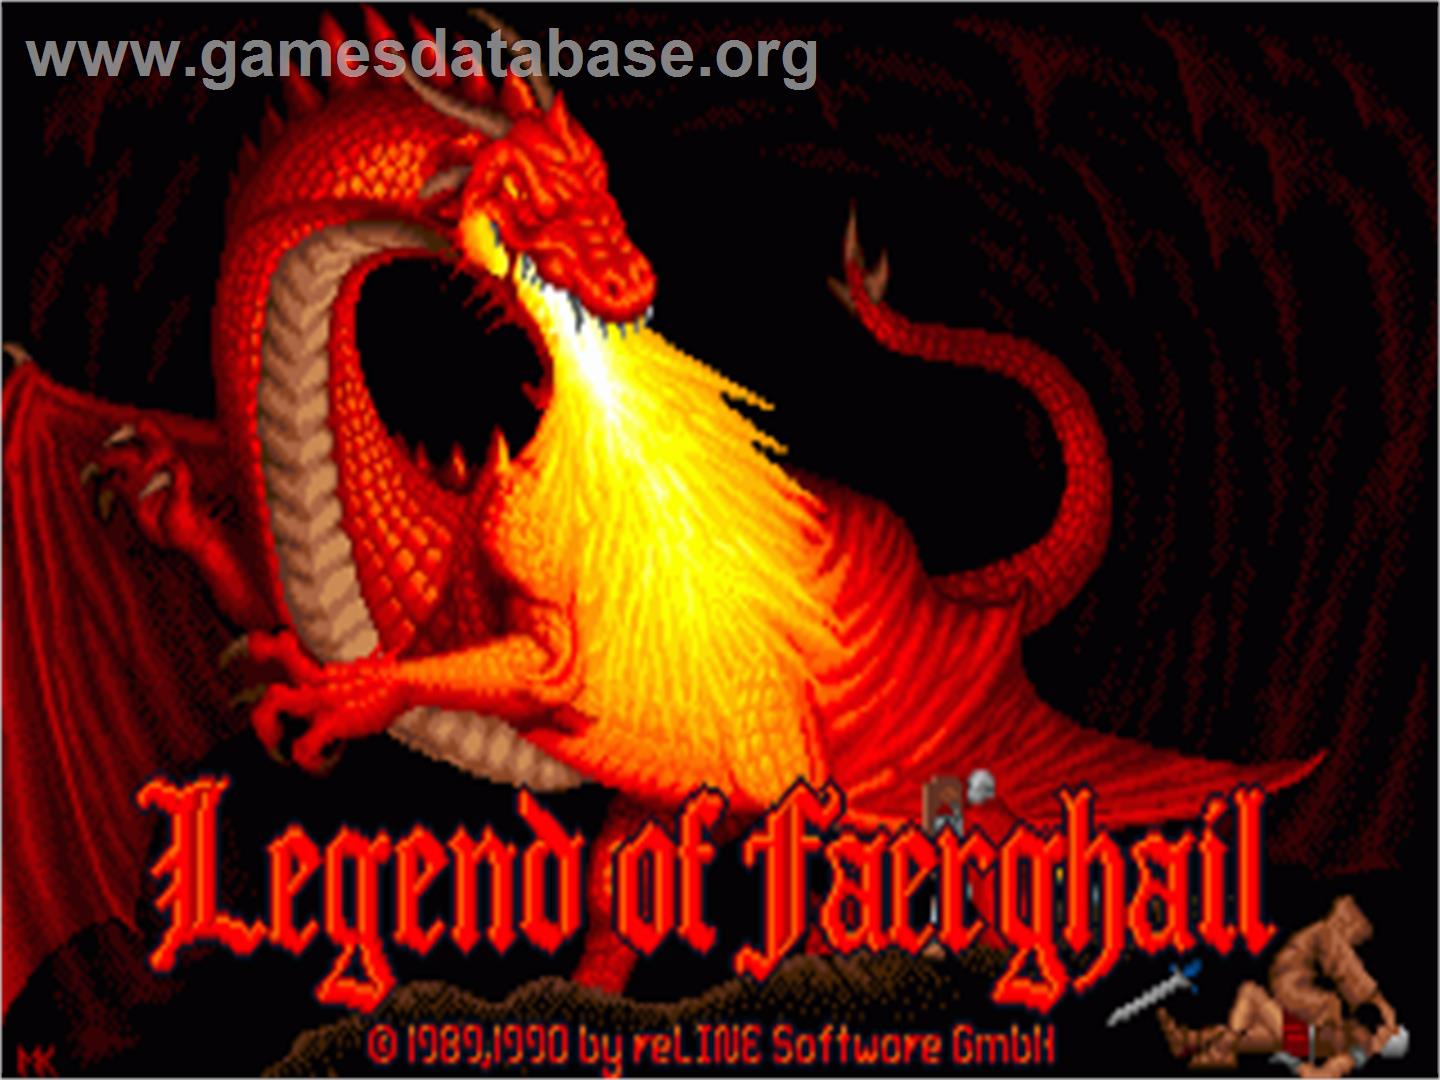 Legend of Faerghail - Commodore Amiga - Artwork - Title Screen